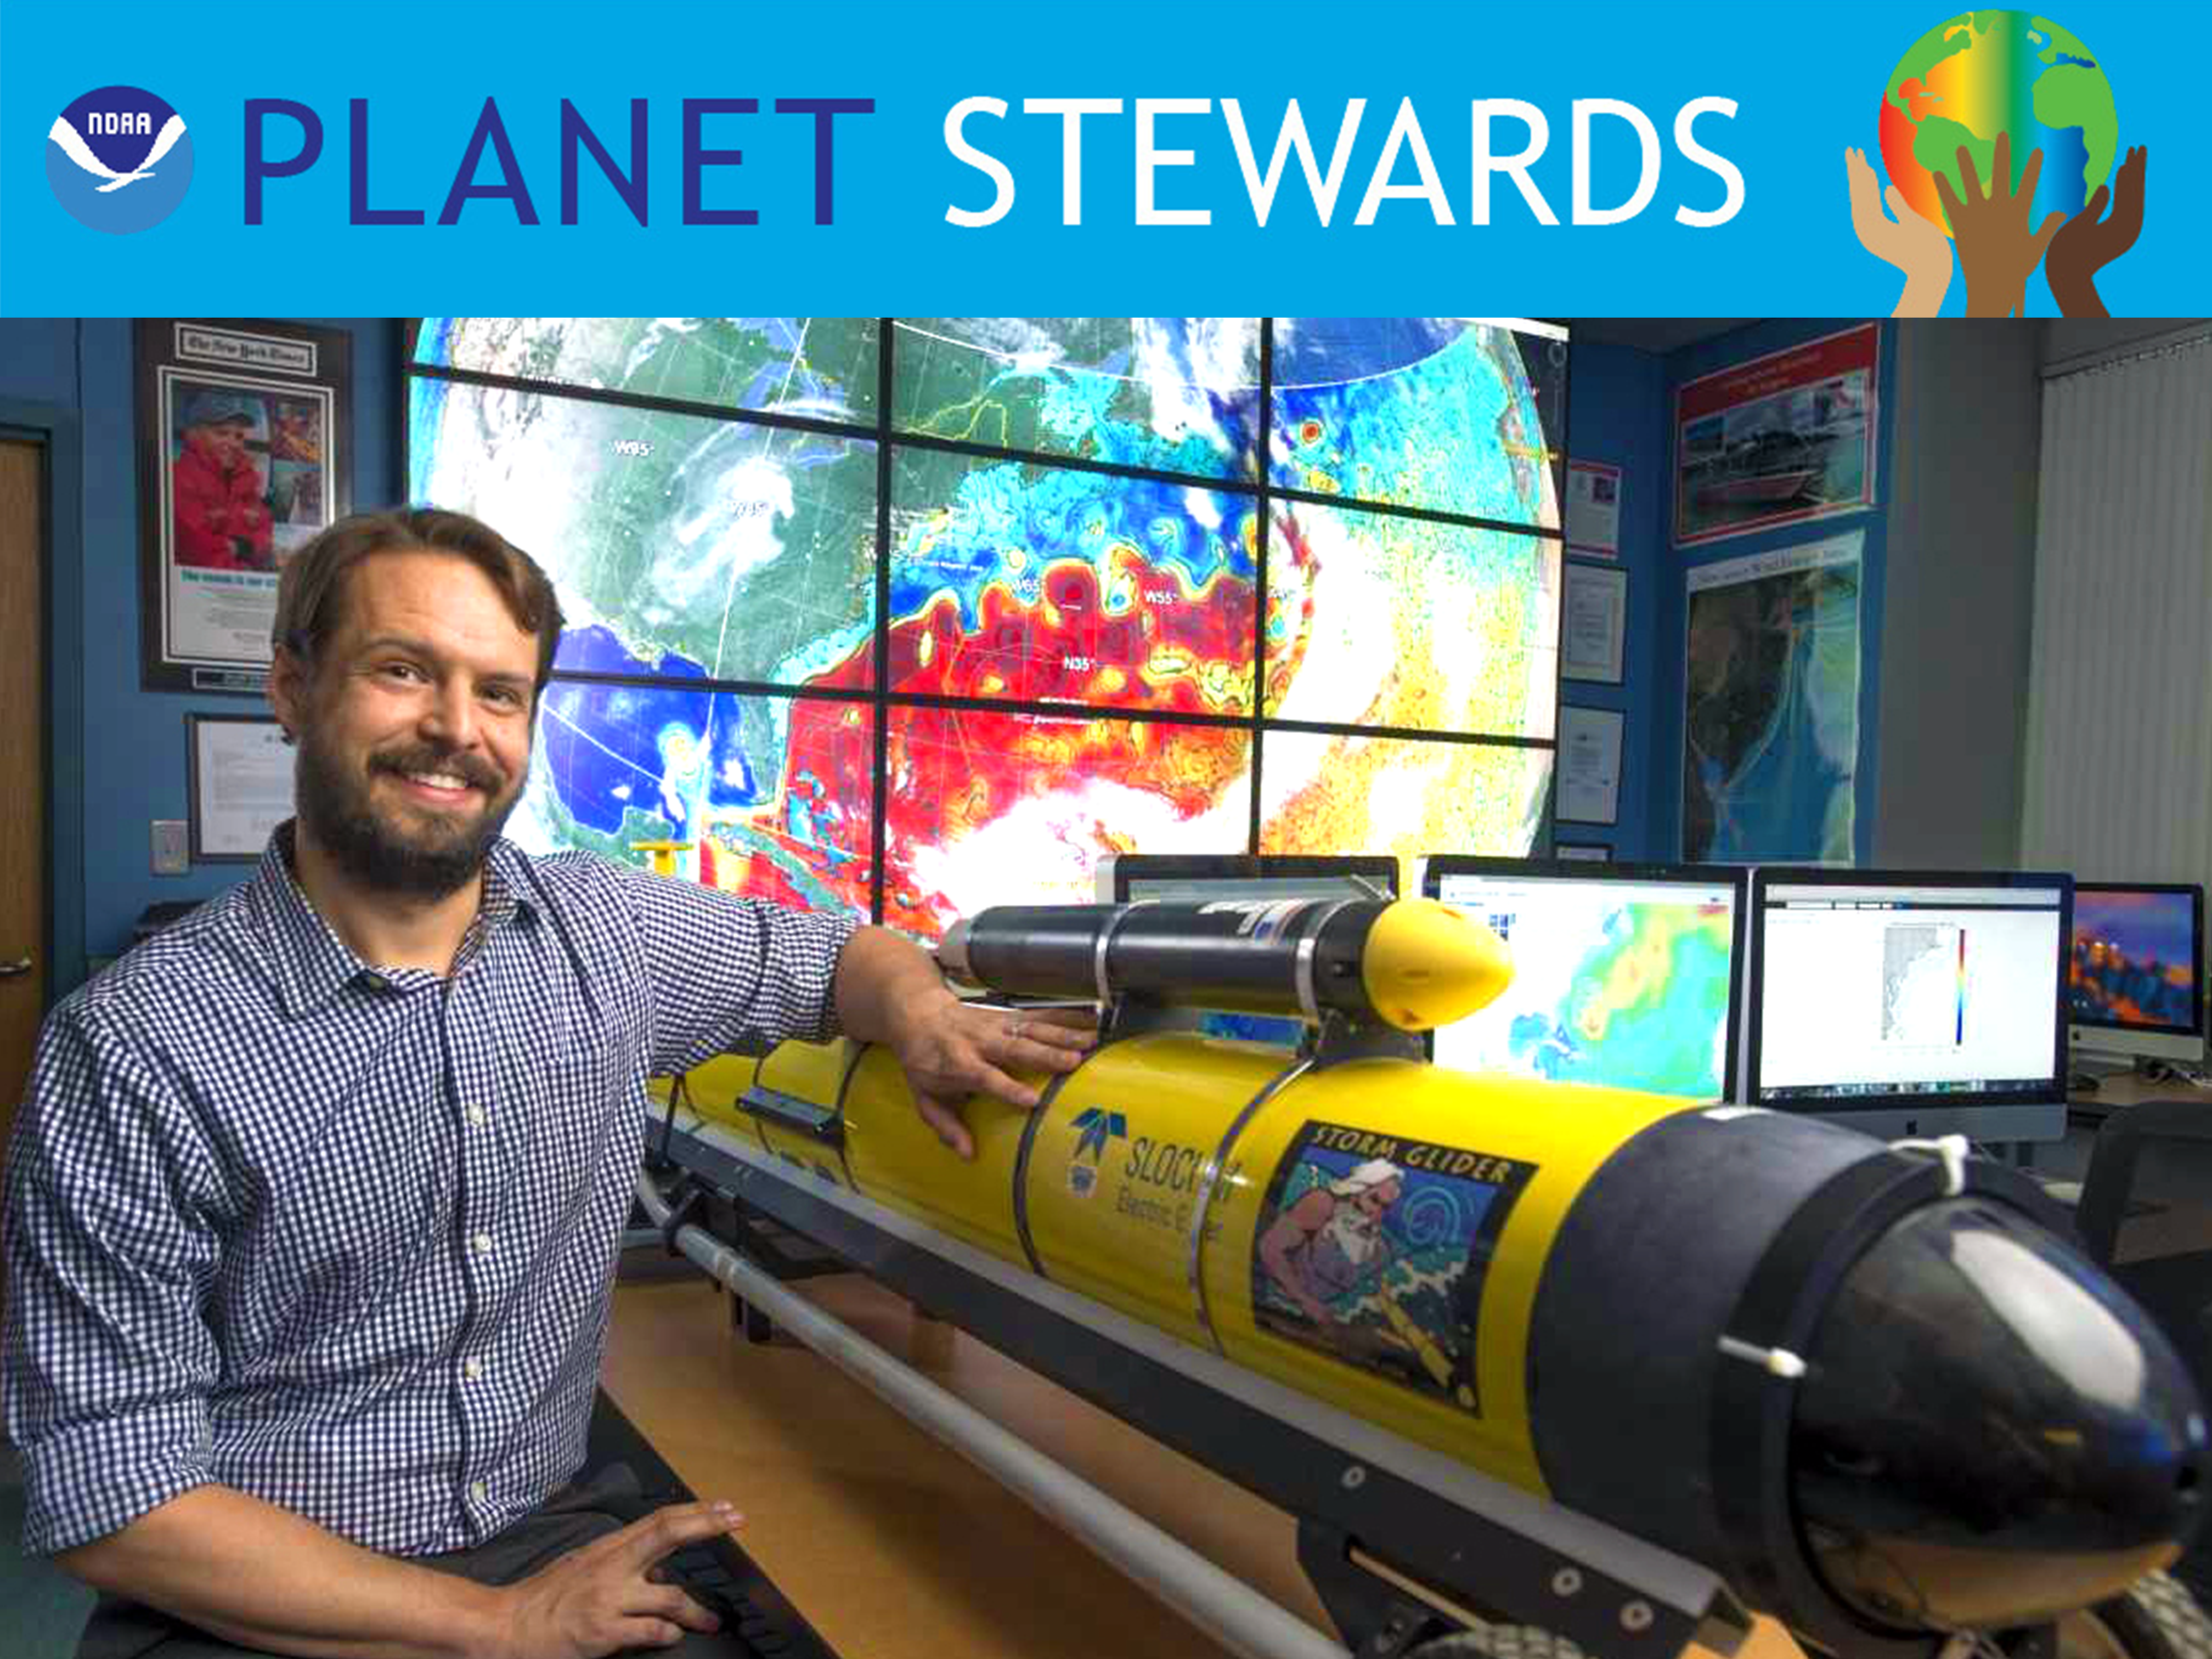 NOAA Planet Stewards Webinar with Travis Miles